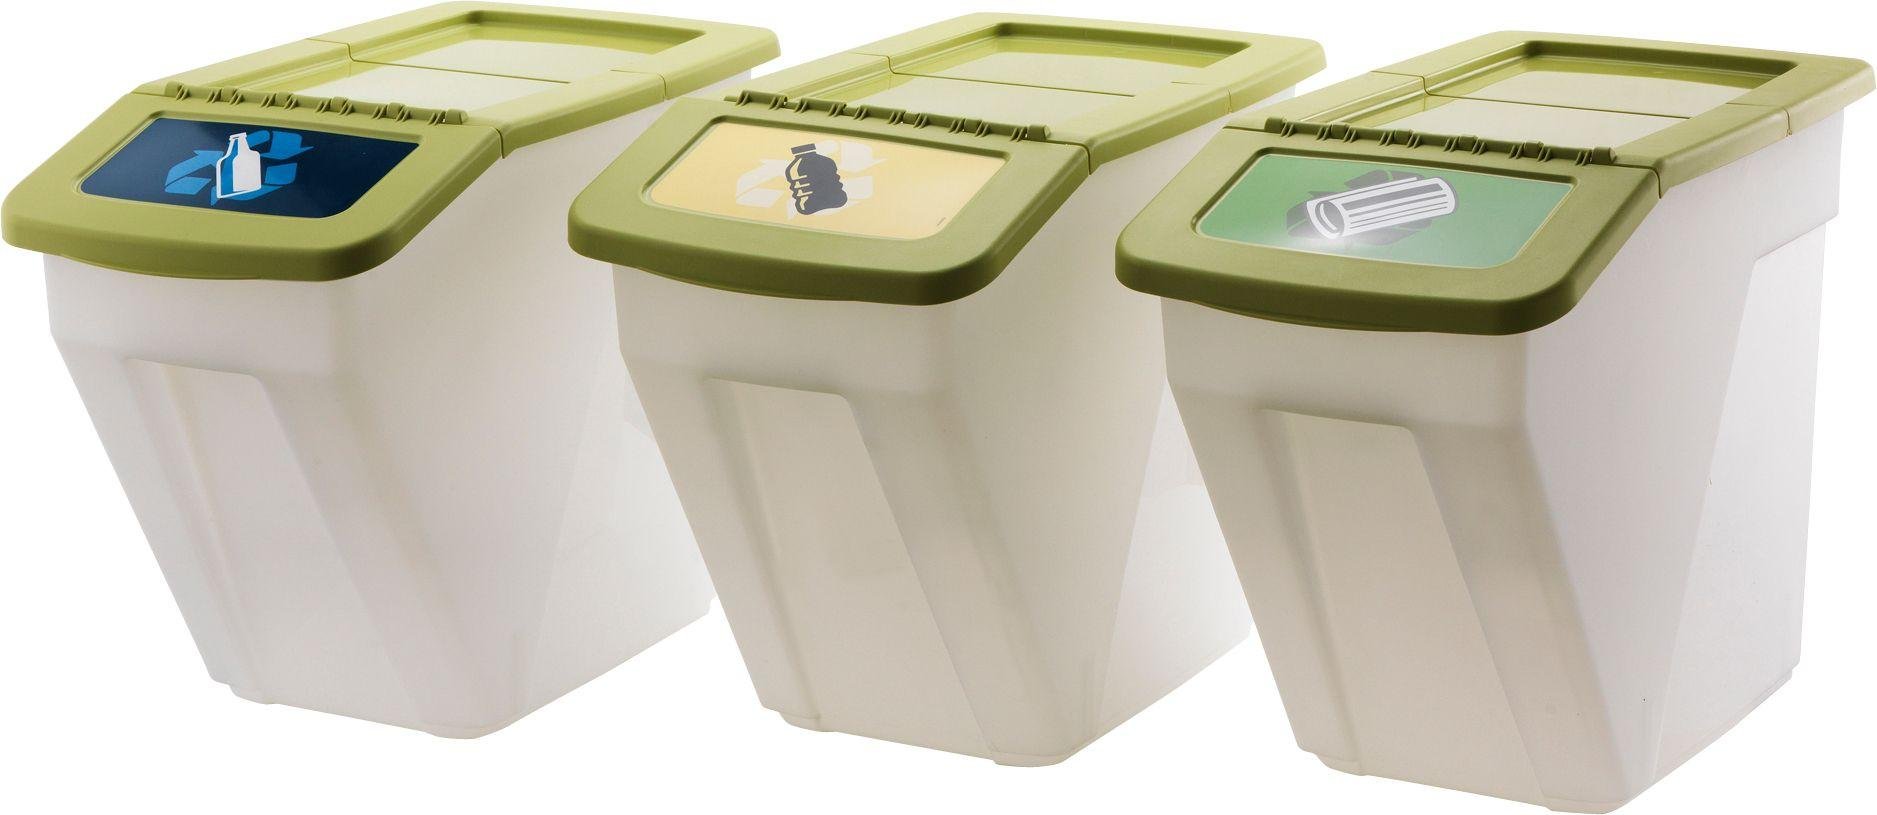 Argos Home 34 Litre Plastic Recycling Bins Review